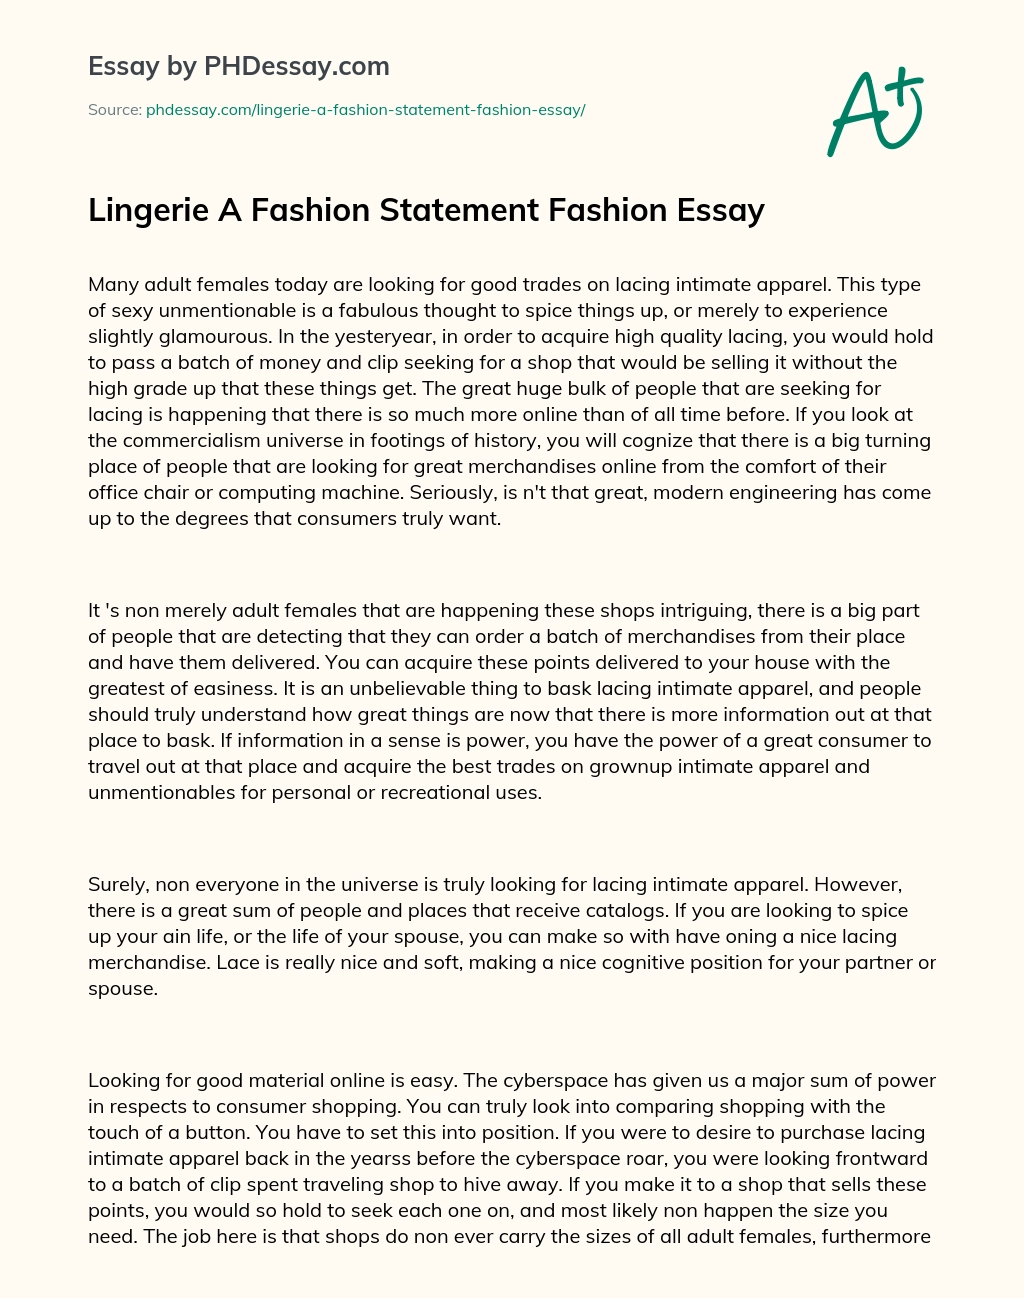 Lingerie A Fashion Statement Fashion Essay essay